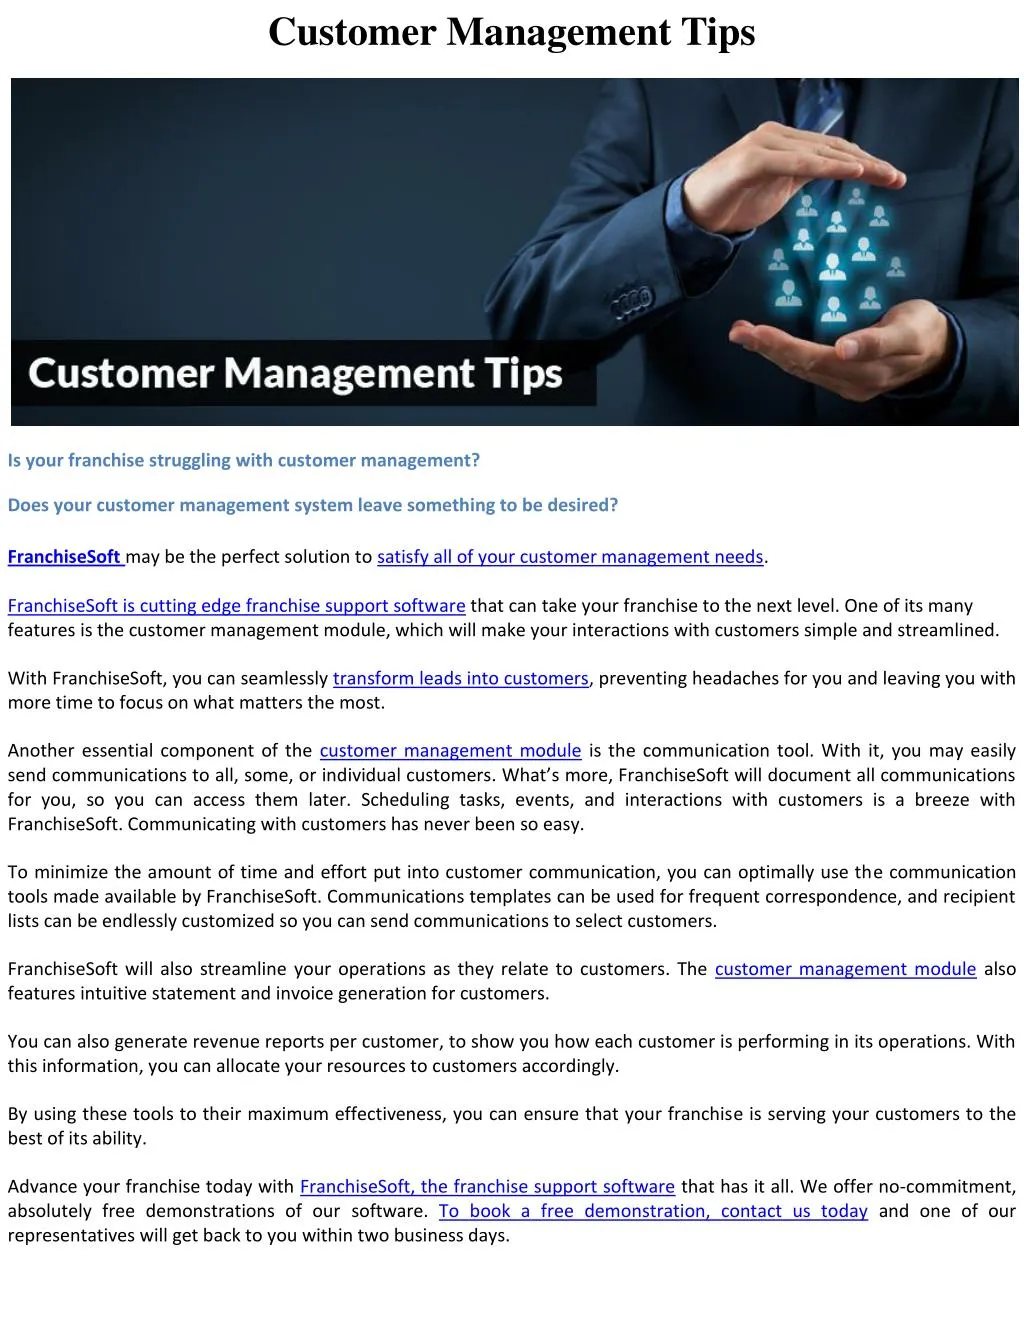 customer management tips